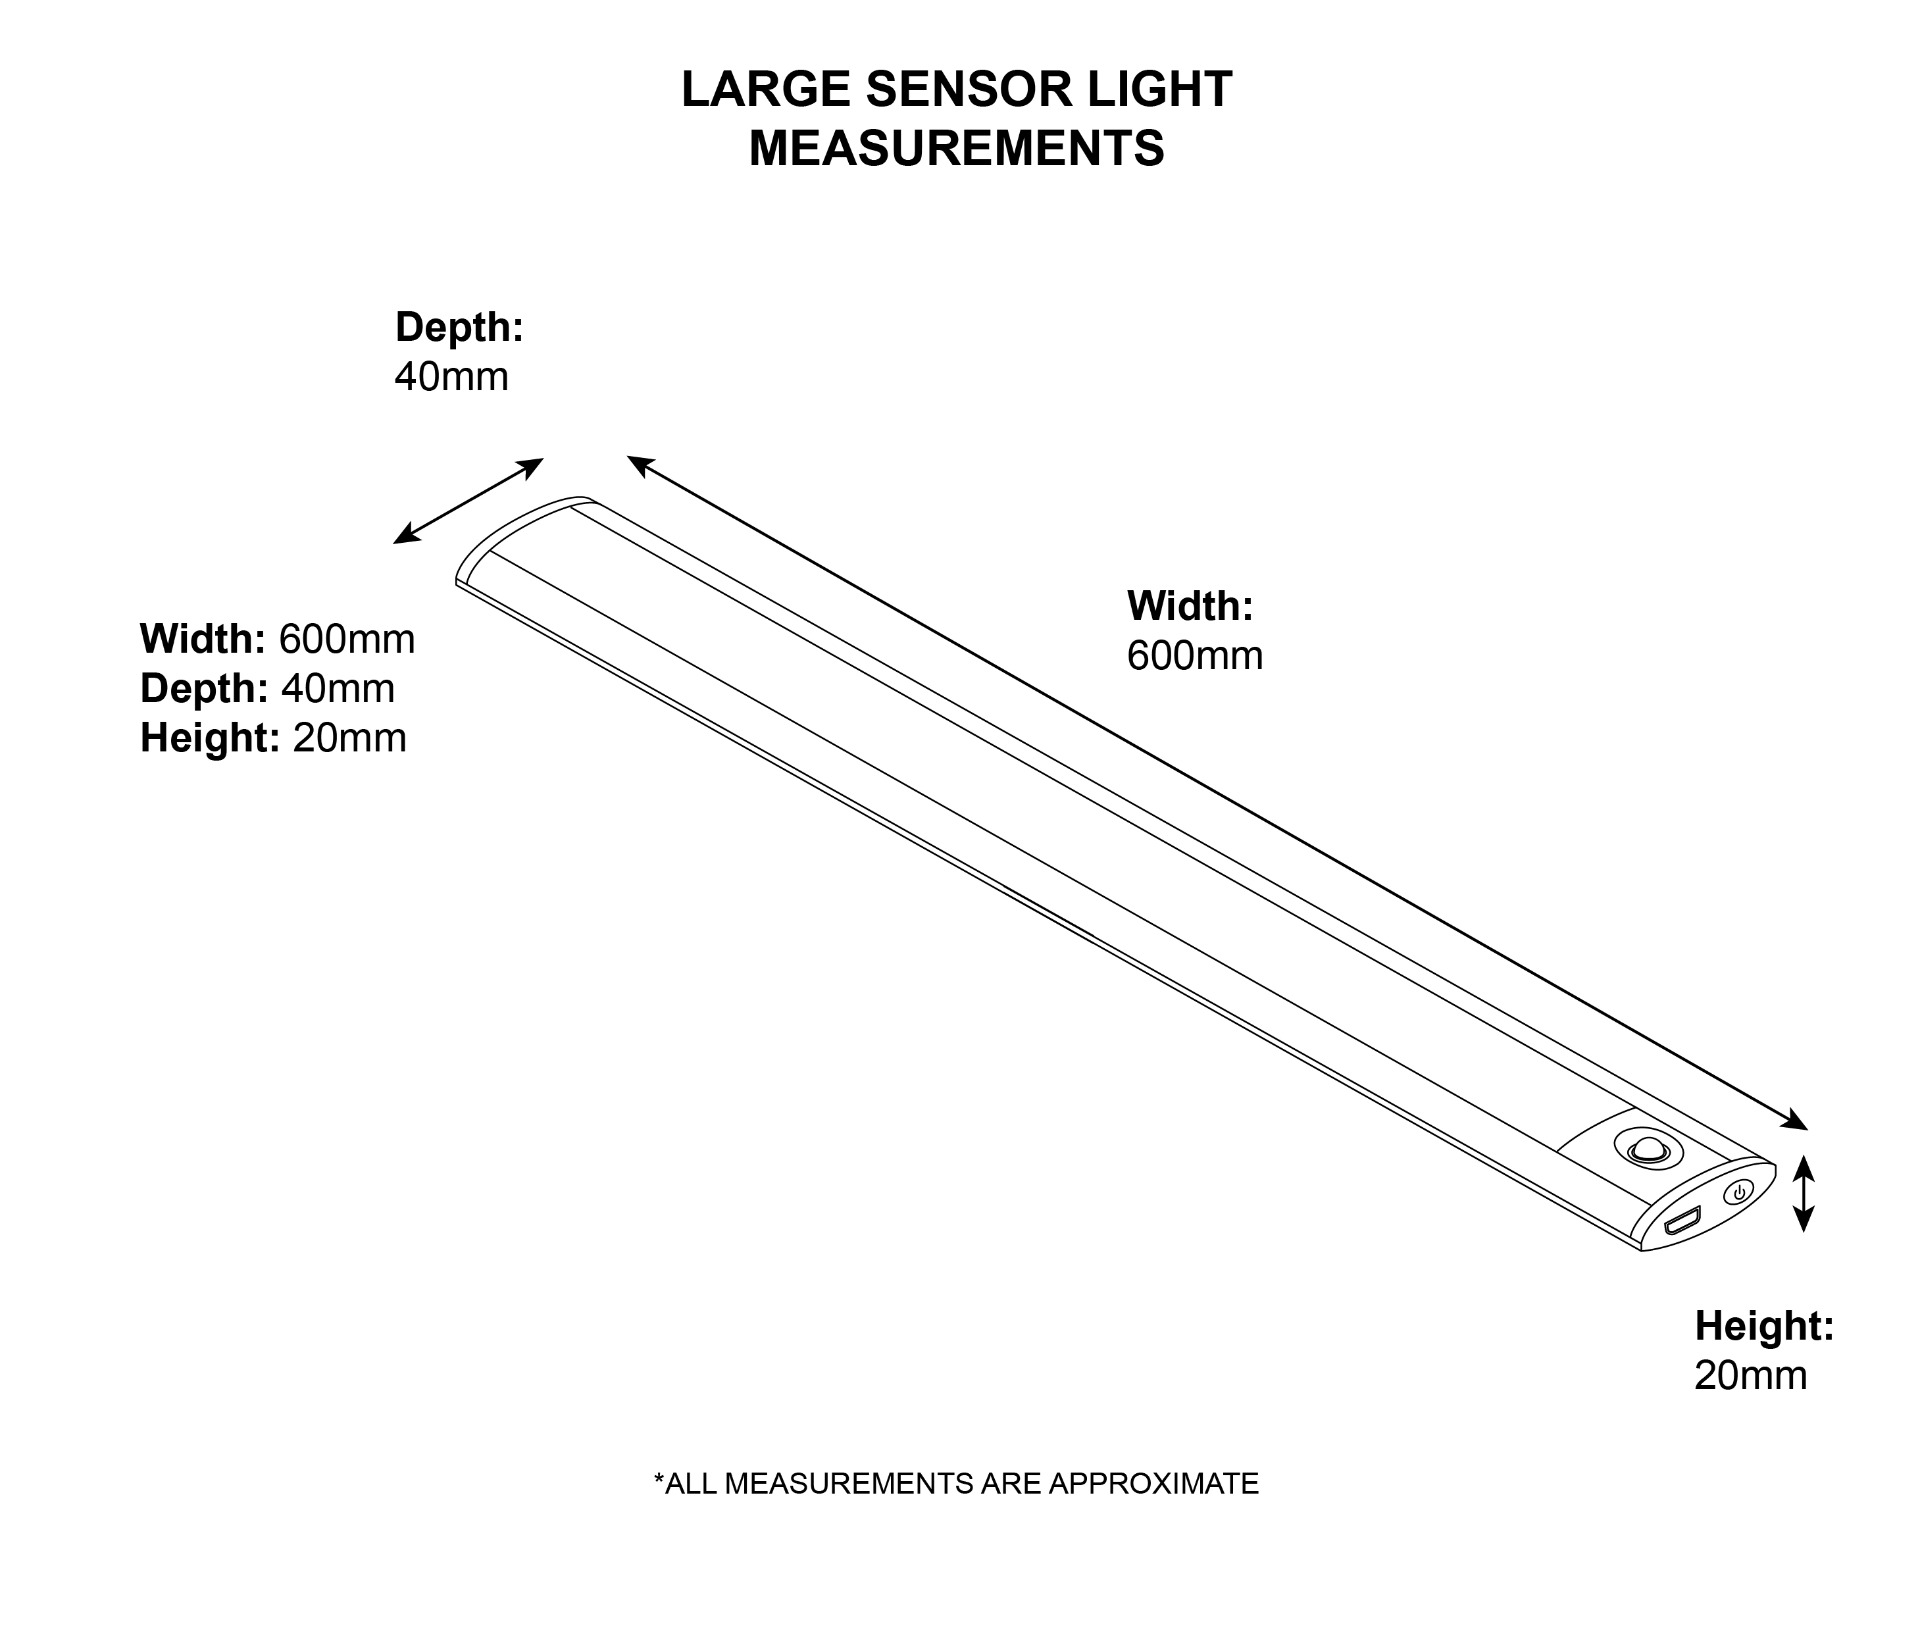 Large LED Sensor Shed Light Dimensions